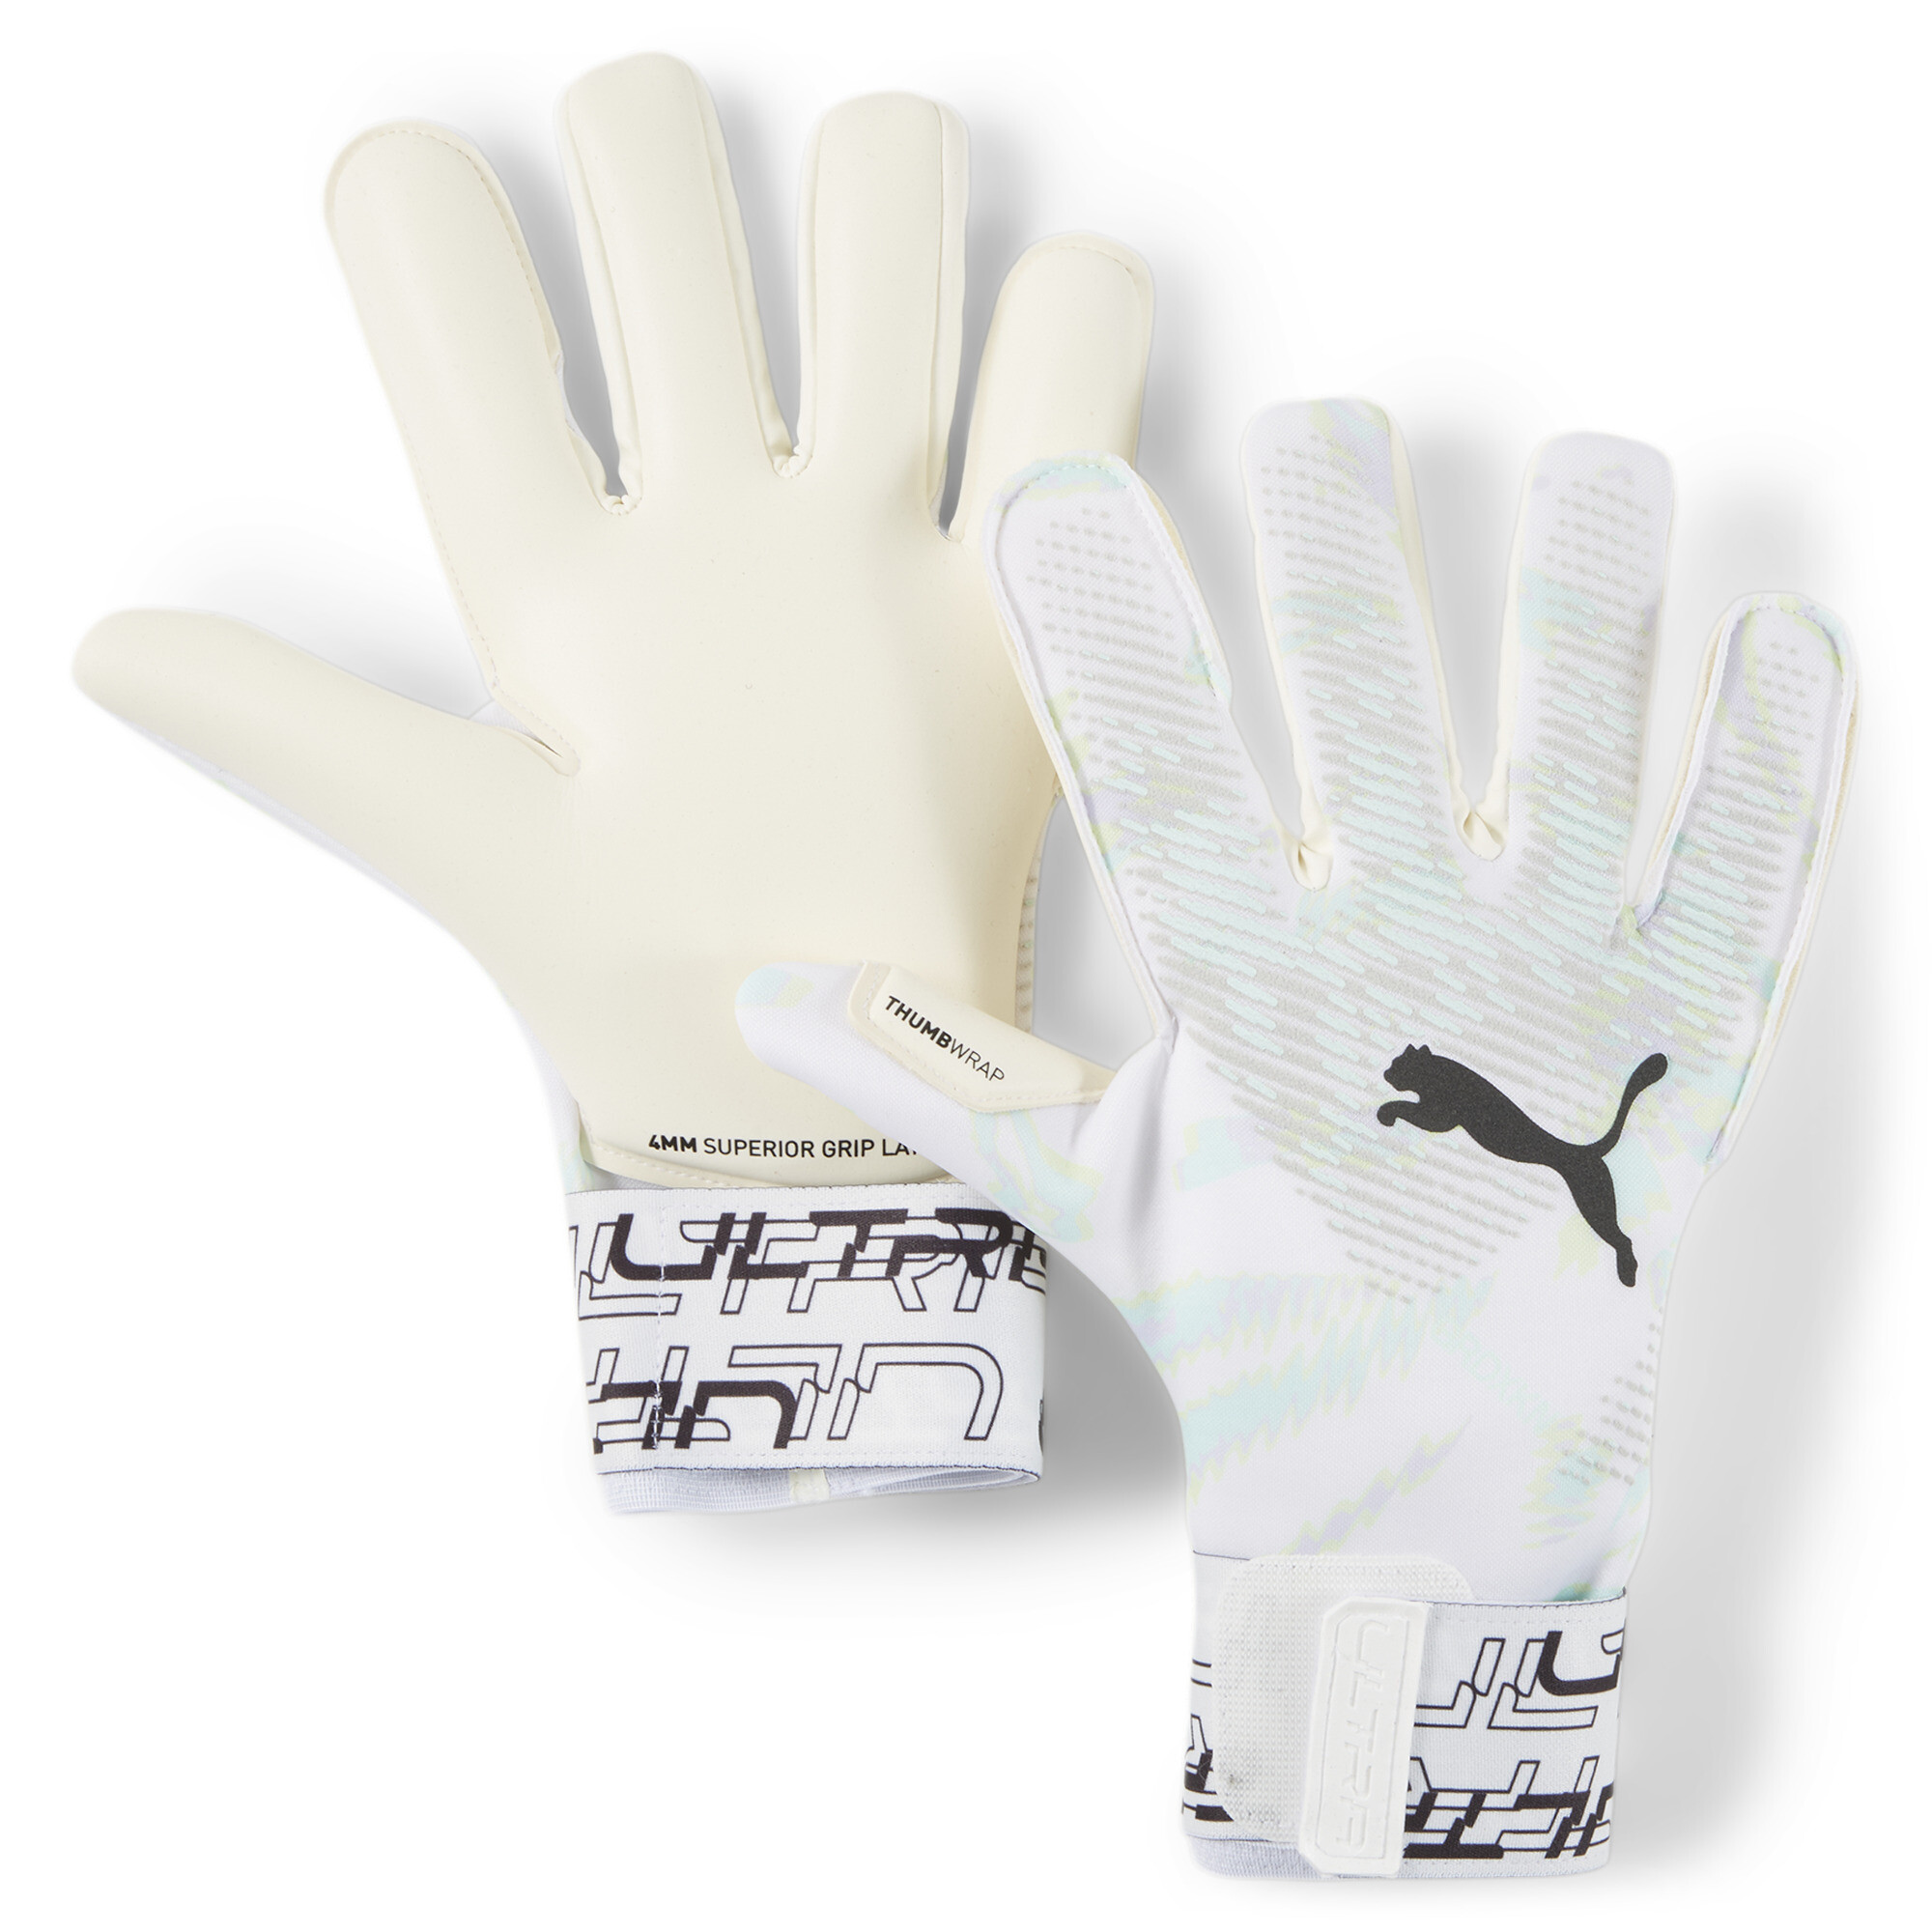 Men's Puma ULTRA Grip 1 Brilliance Hybrid Football Goalkeeper Gloves, White, Size 8.5, Accessories